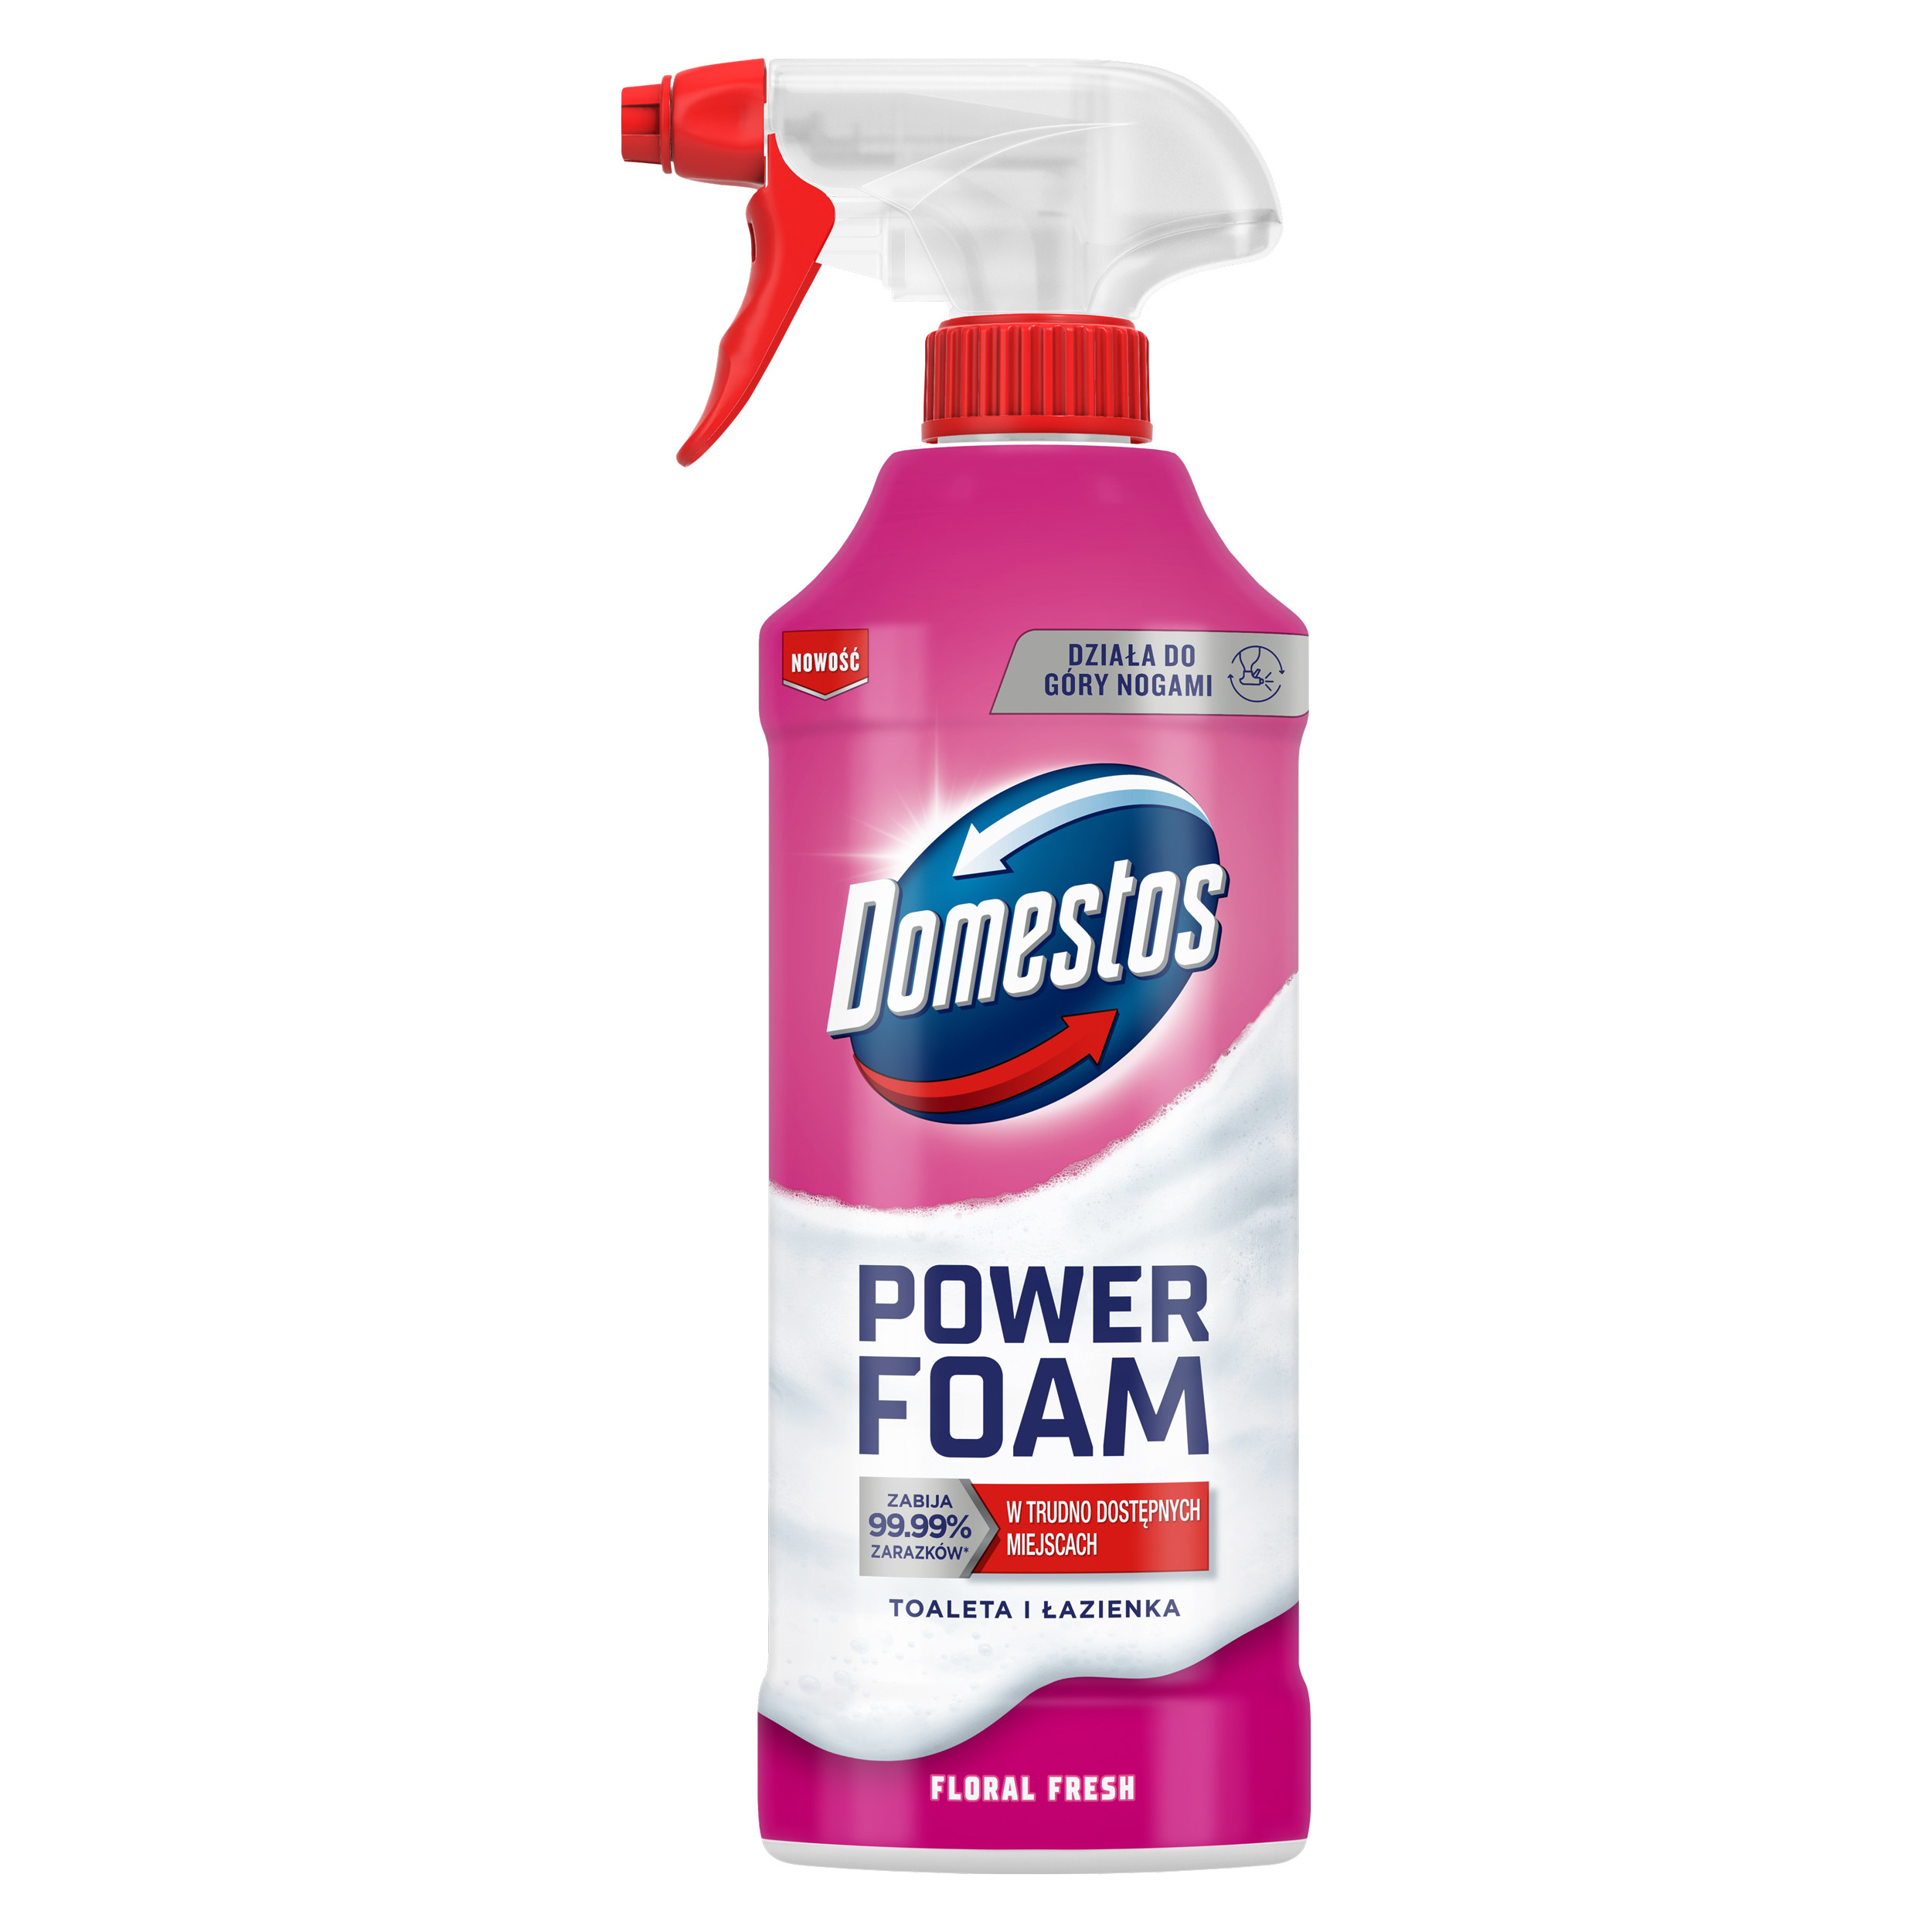 Domestos Power Foam Floral Burst packshot